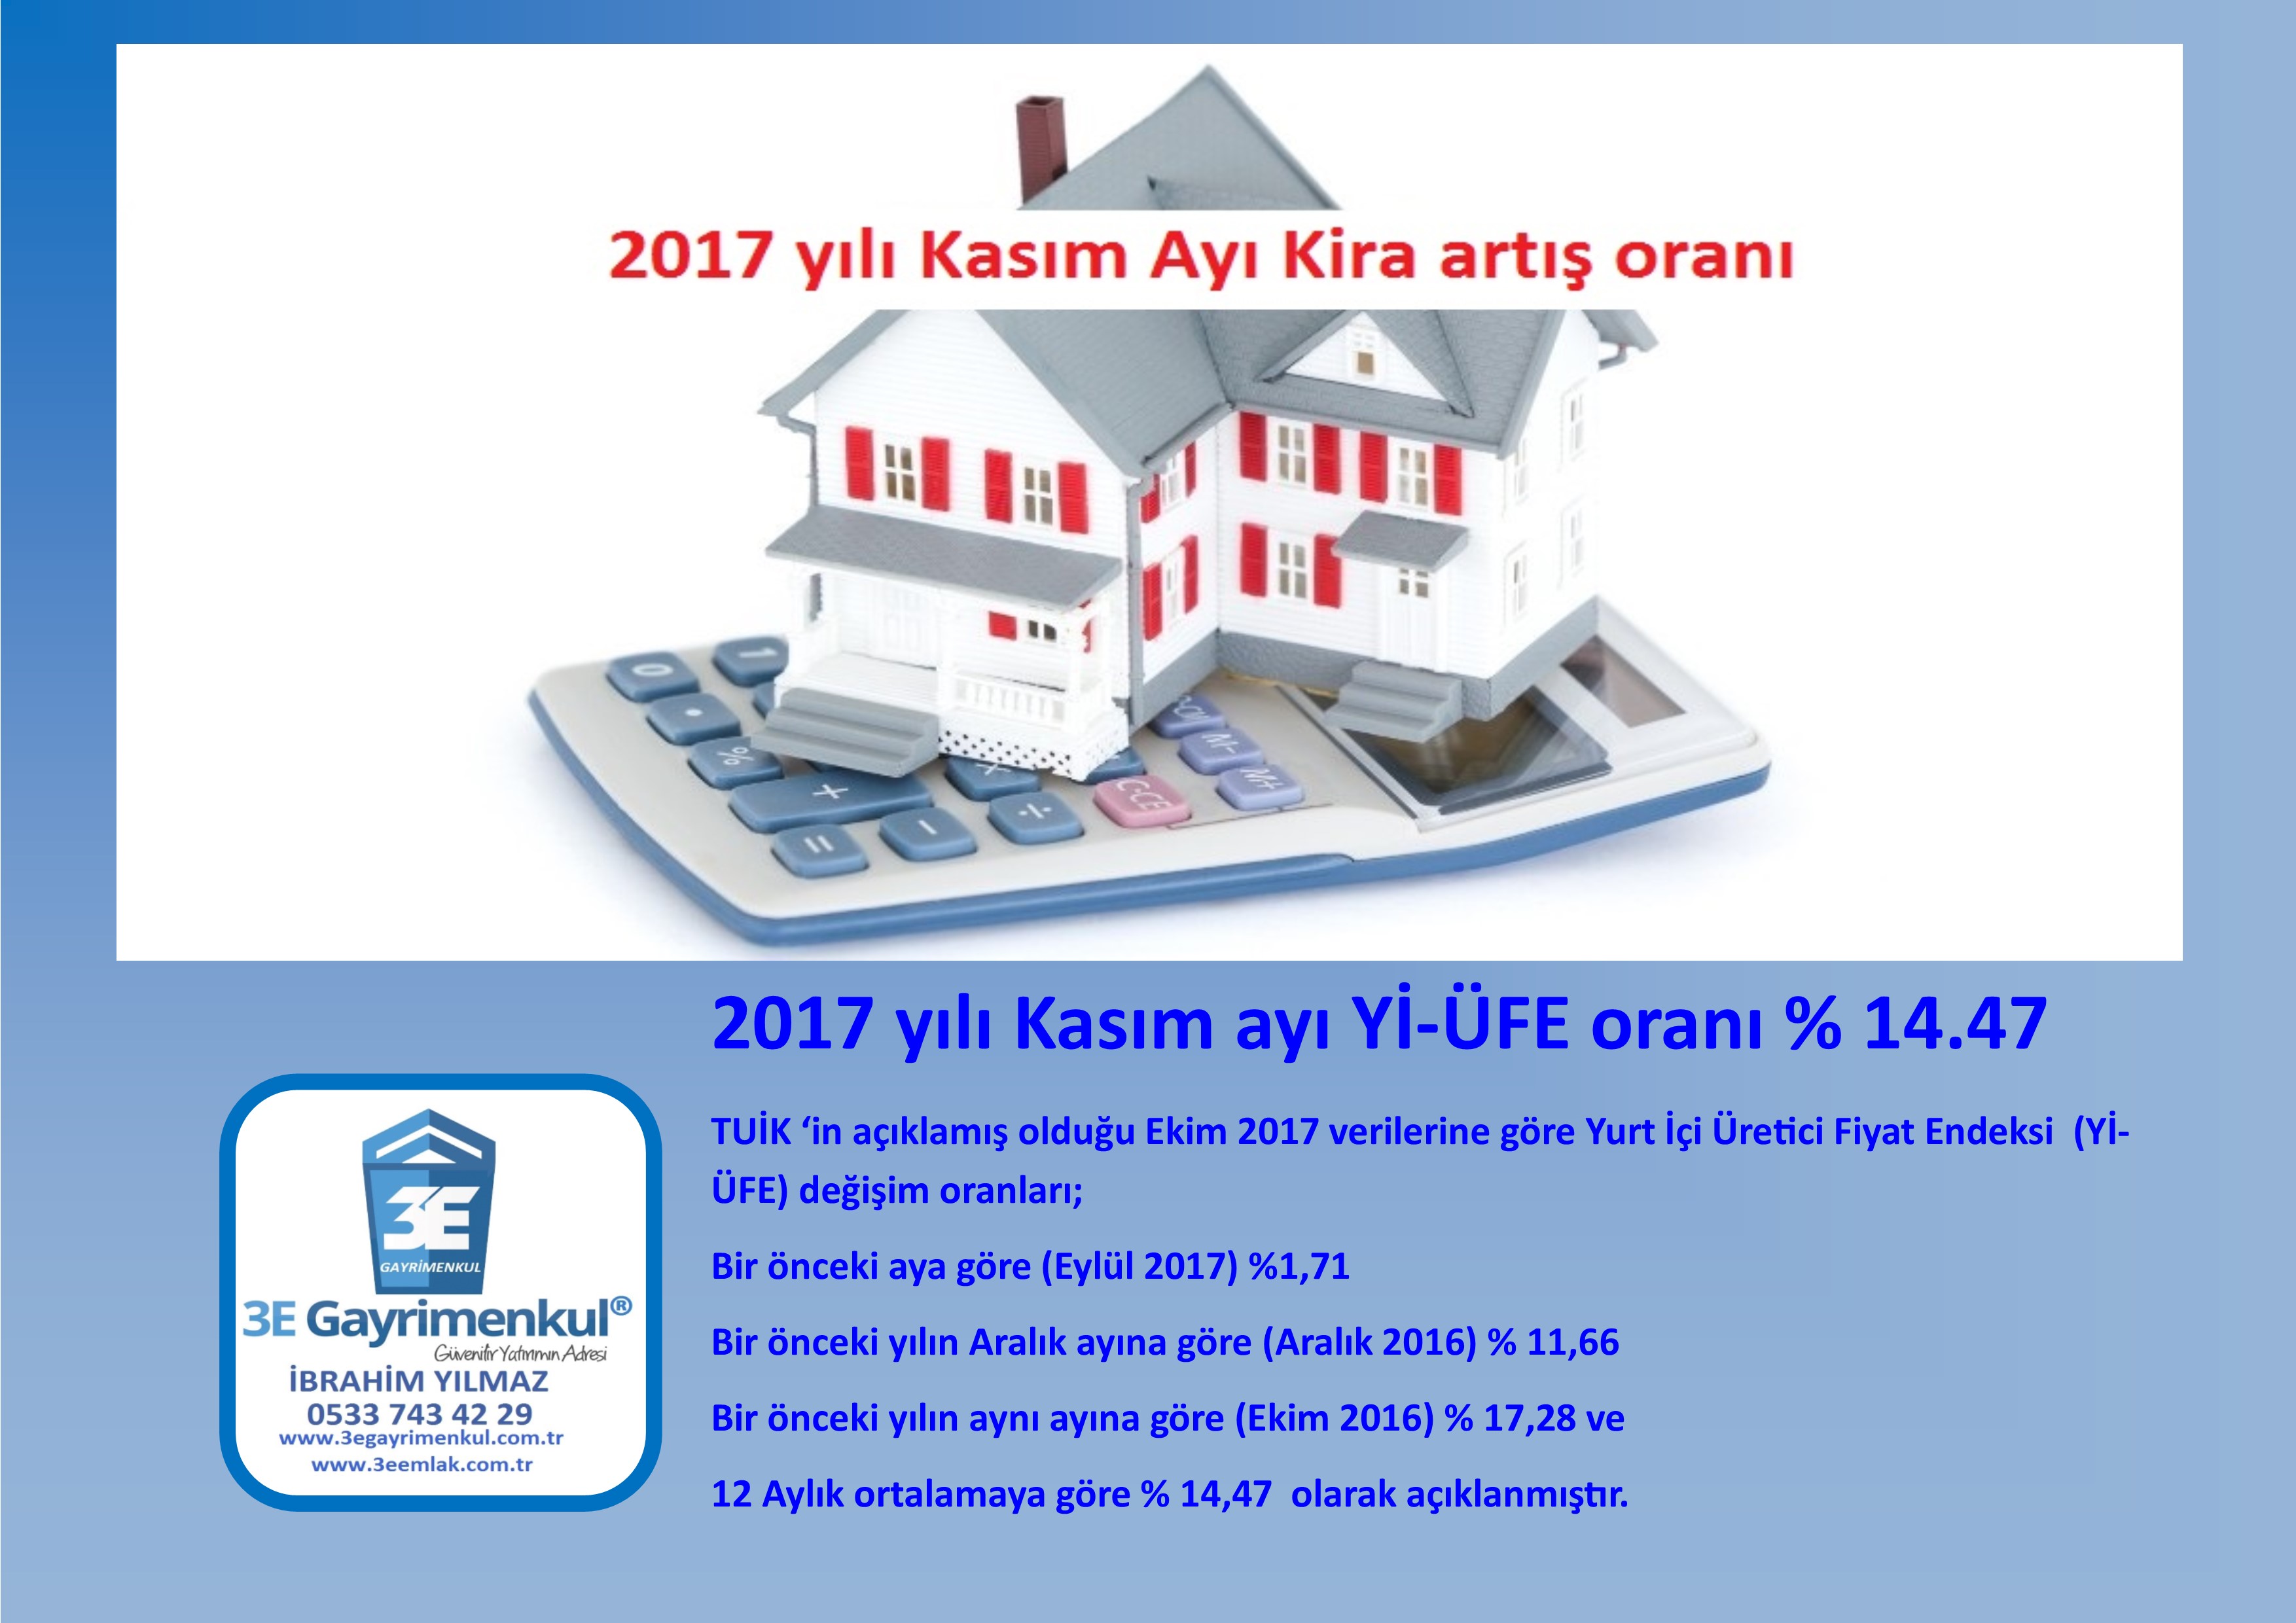 2017 YILI KASIM AYI Yİ-ÜFE ORANI - (2017 KASIM KİRA ARTIŞ ORANI )  17.11.2017